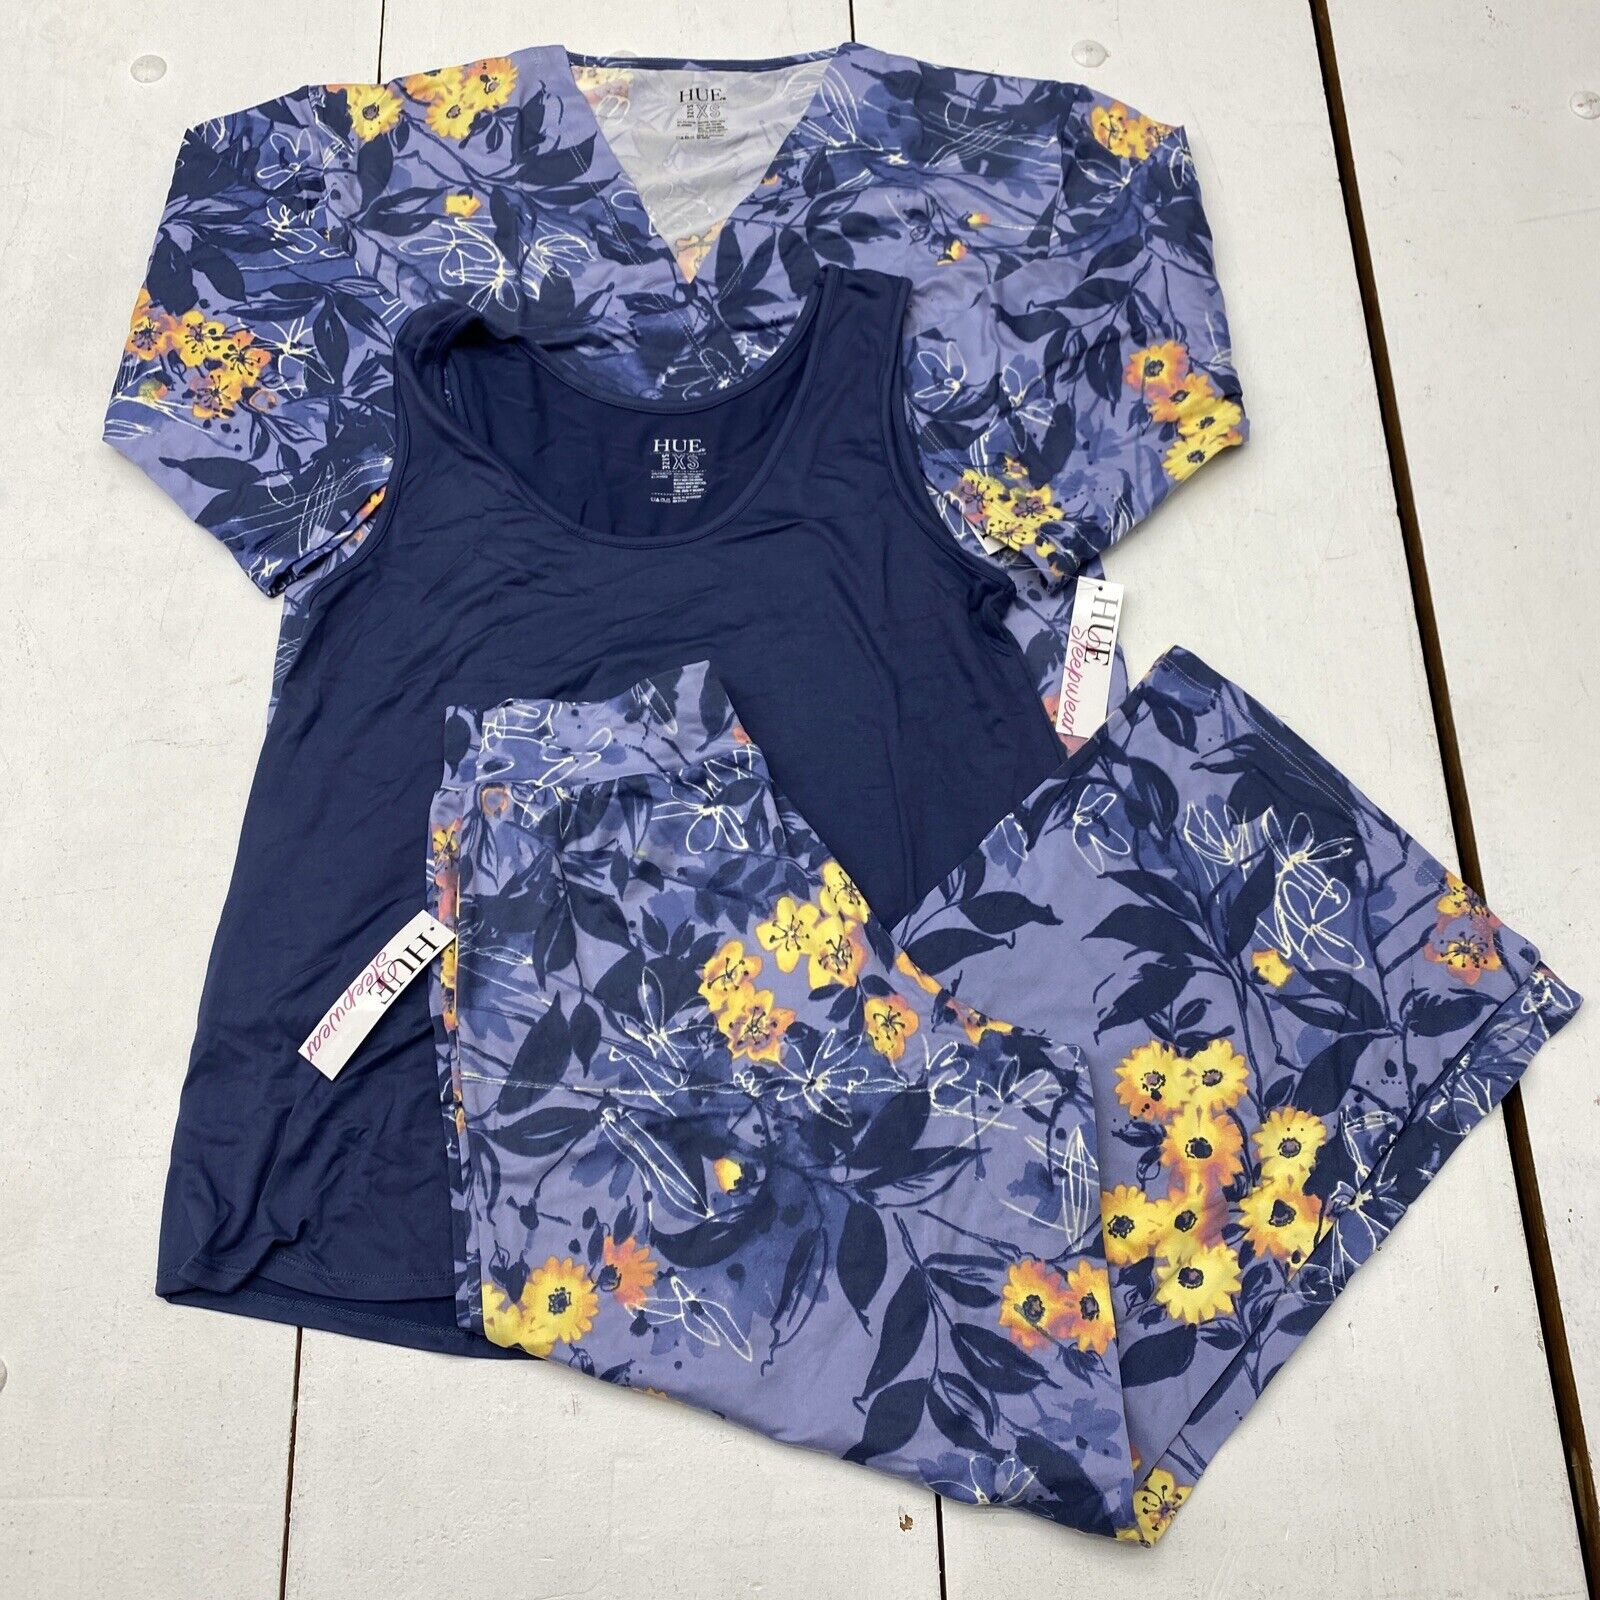 HUE Trinity 3-piece Capri Pajama Set Blue Indigo Womens Size XSmall Ne -  beyond exchange